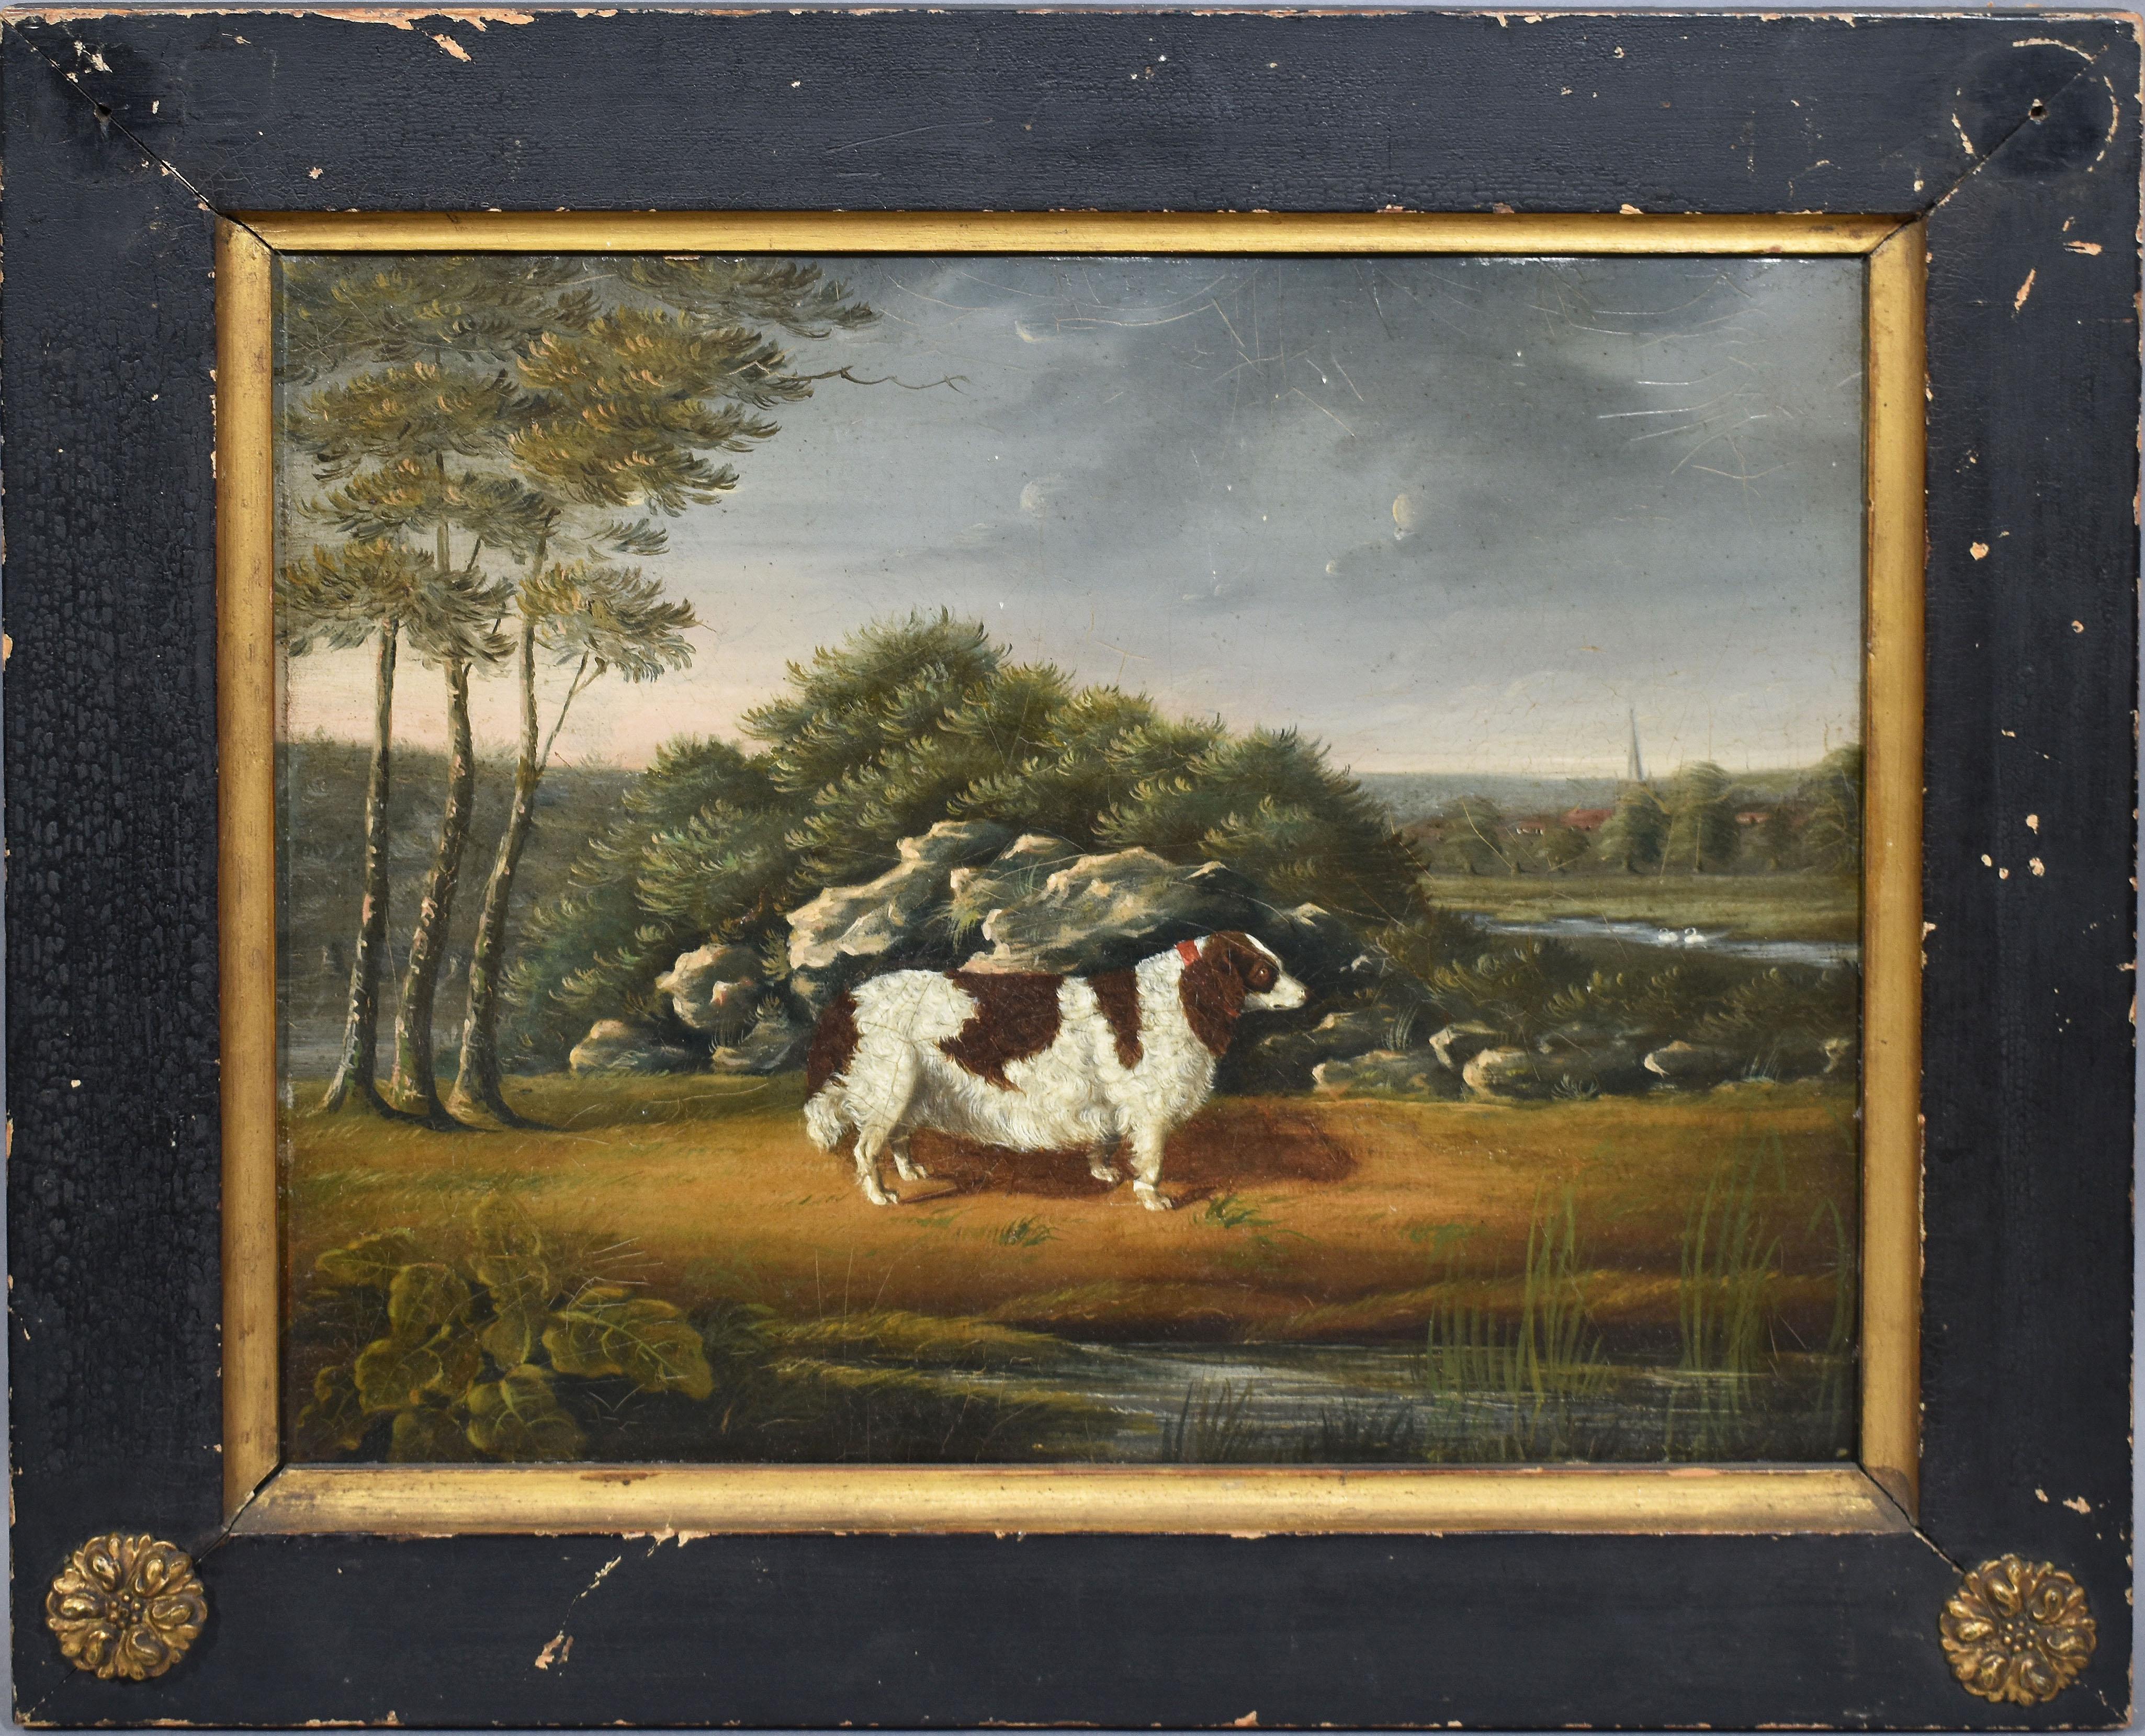 Unknown Animal Painting - Early American School Folk Art Dog Portrait & Landscape Painting, Hancock 1826